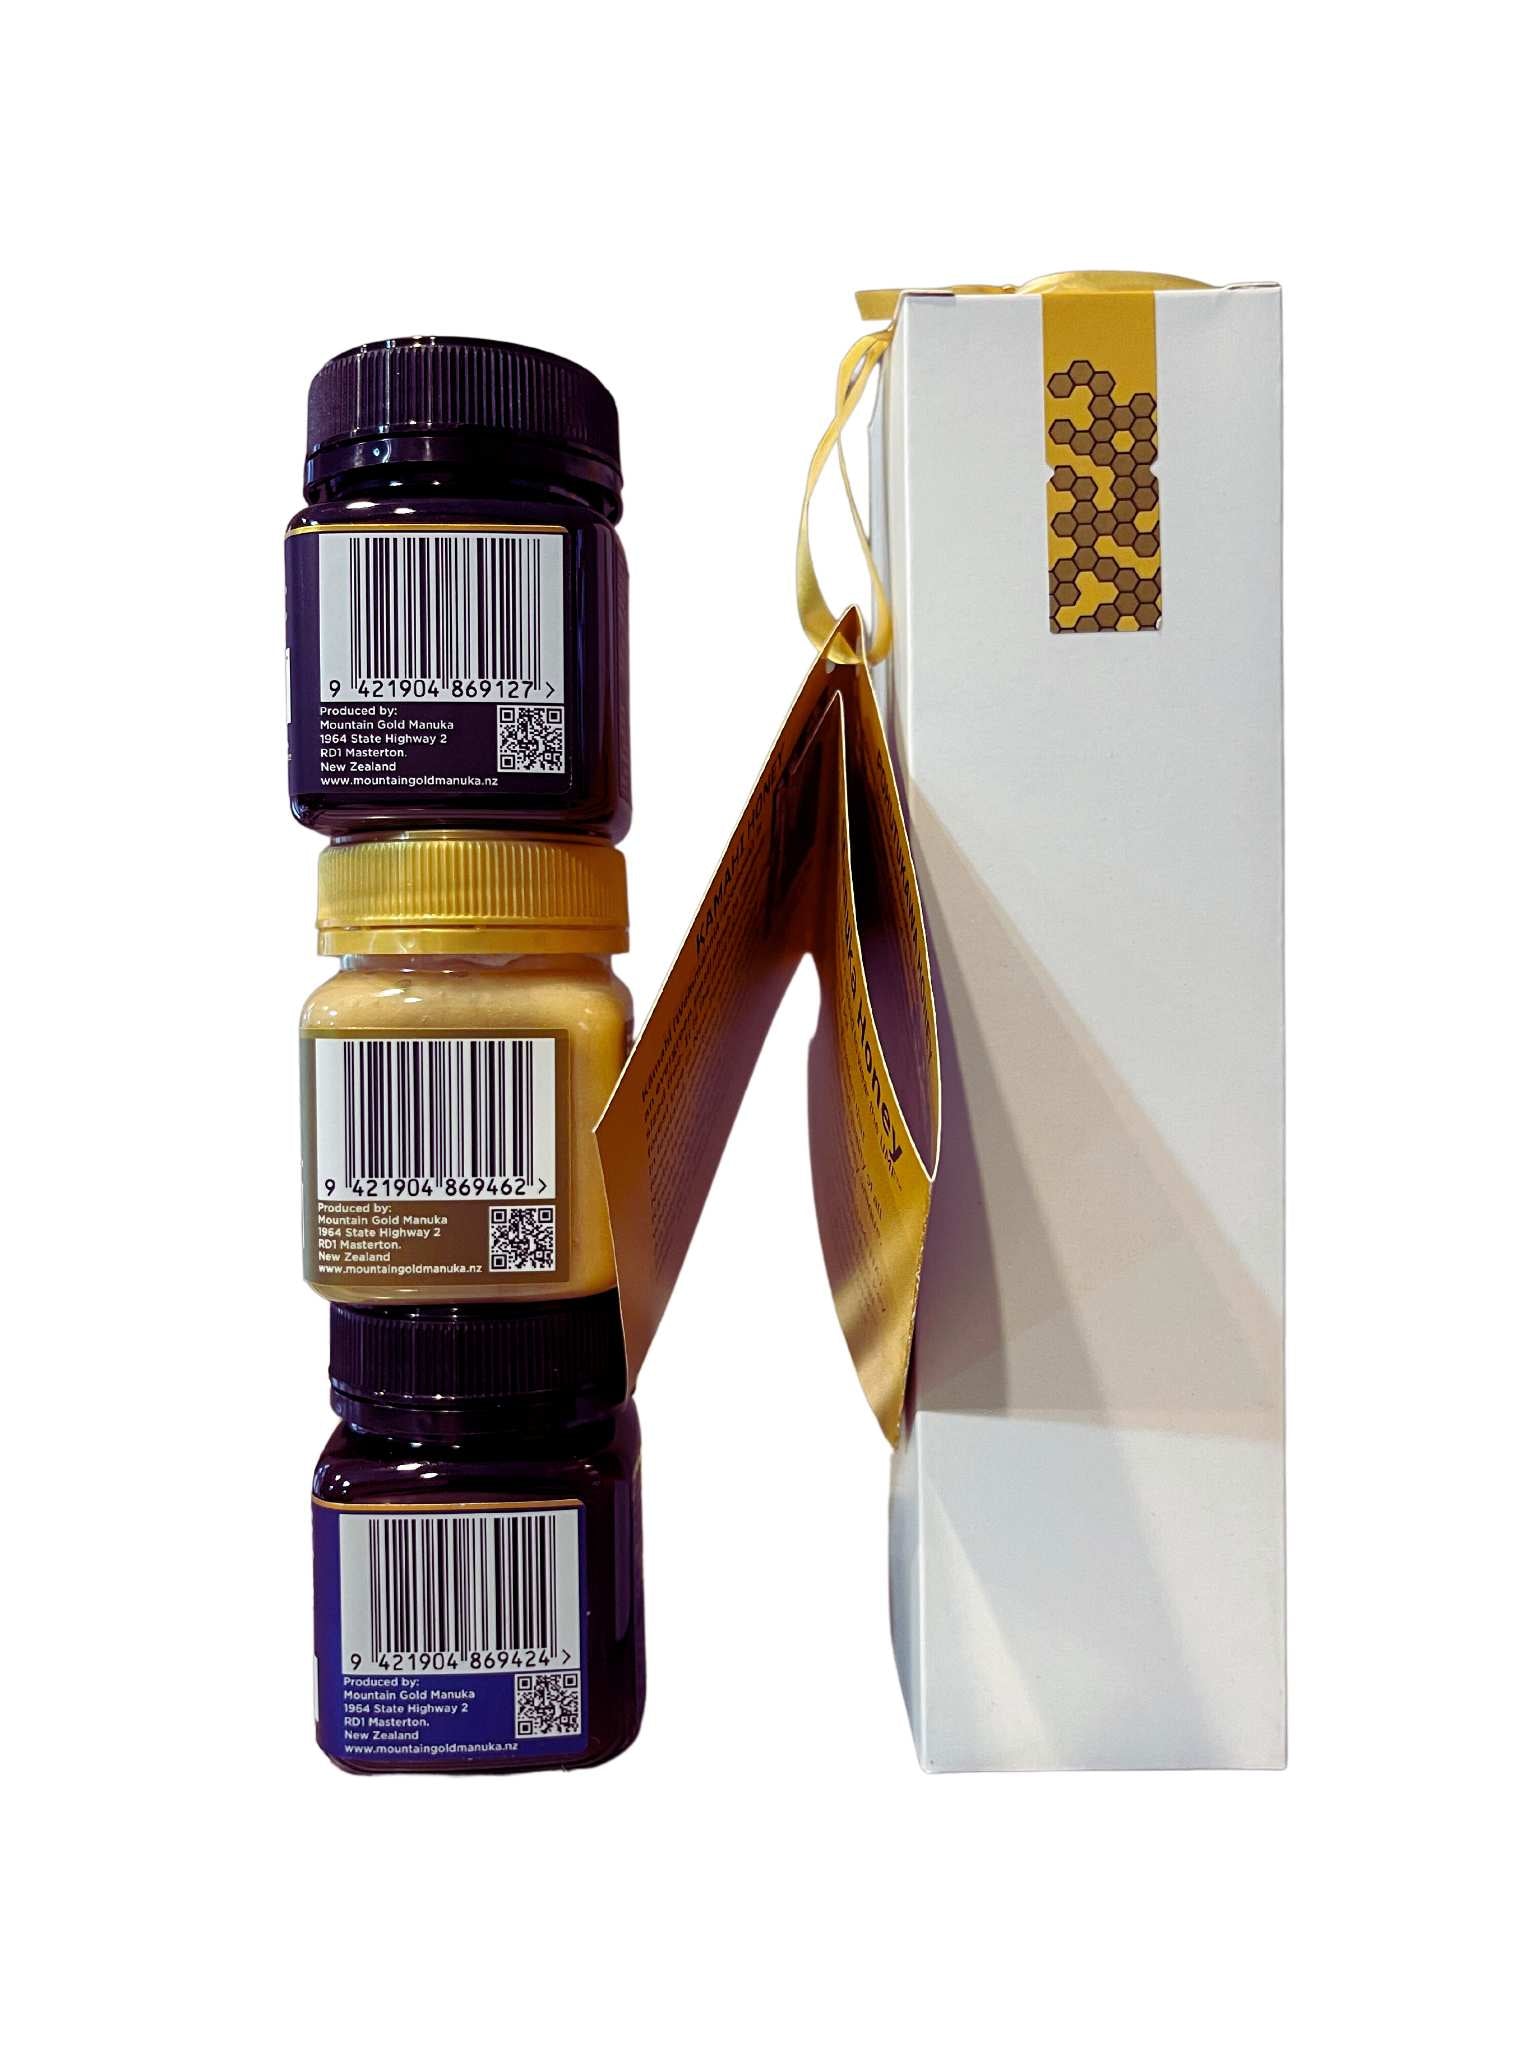 Mountain Gold UMF 5+ Manuka, Pohutukawa, and Kamahi Honey Gift Pack